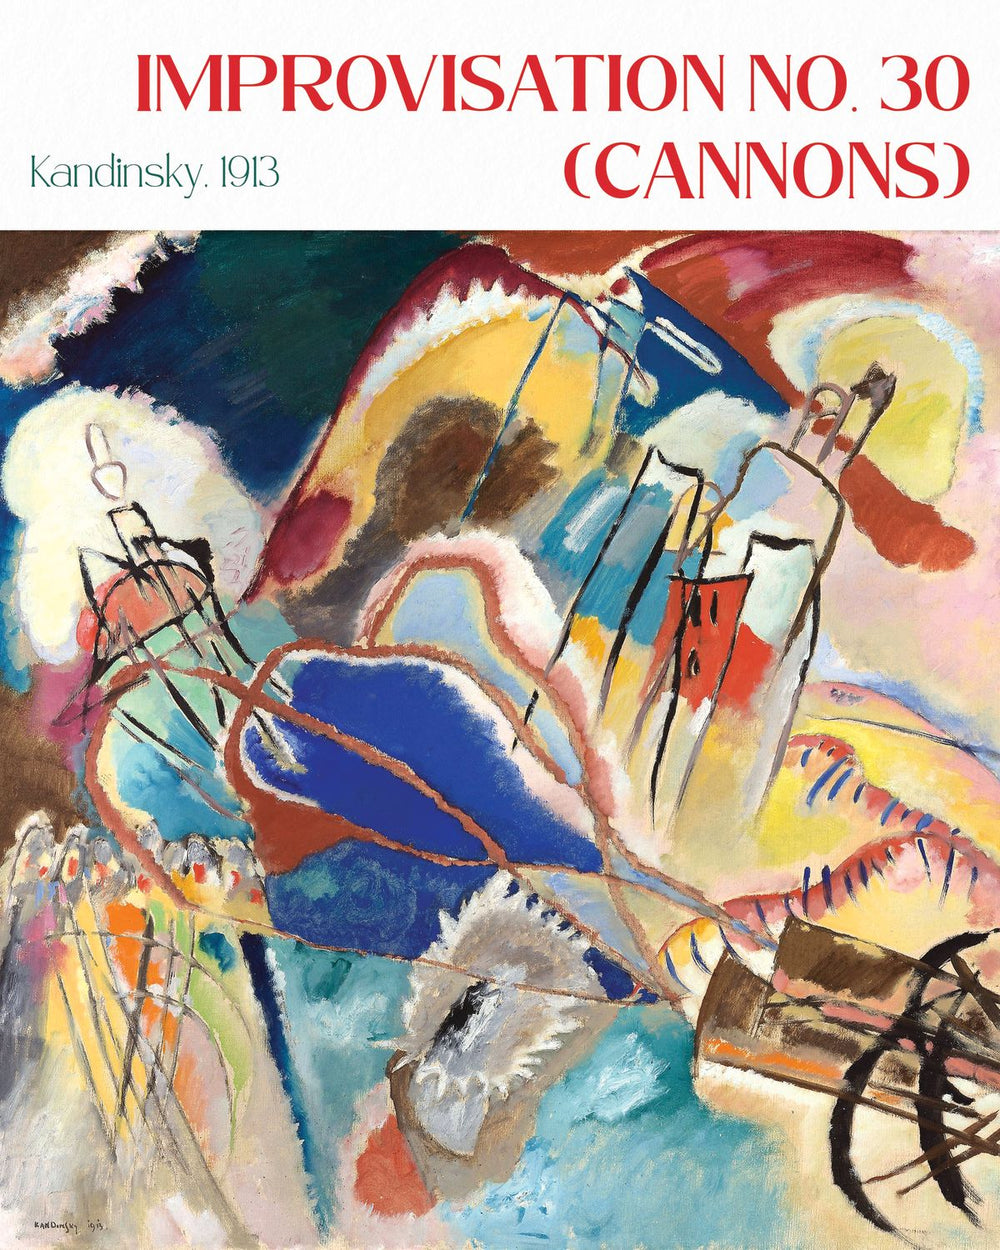 Improvisation No. 30 Cannons Kandinsky Exhibition Poster